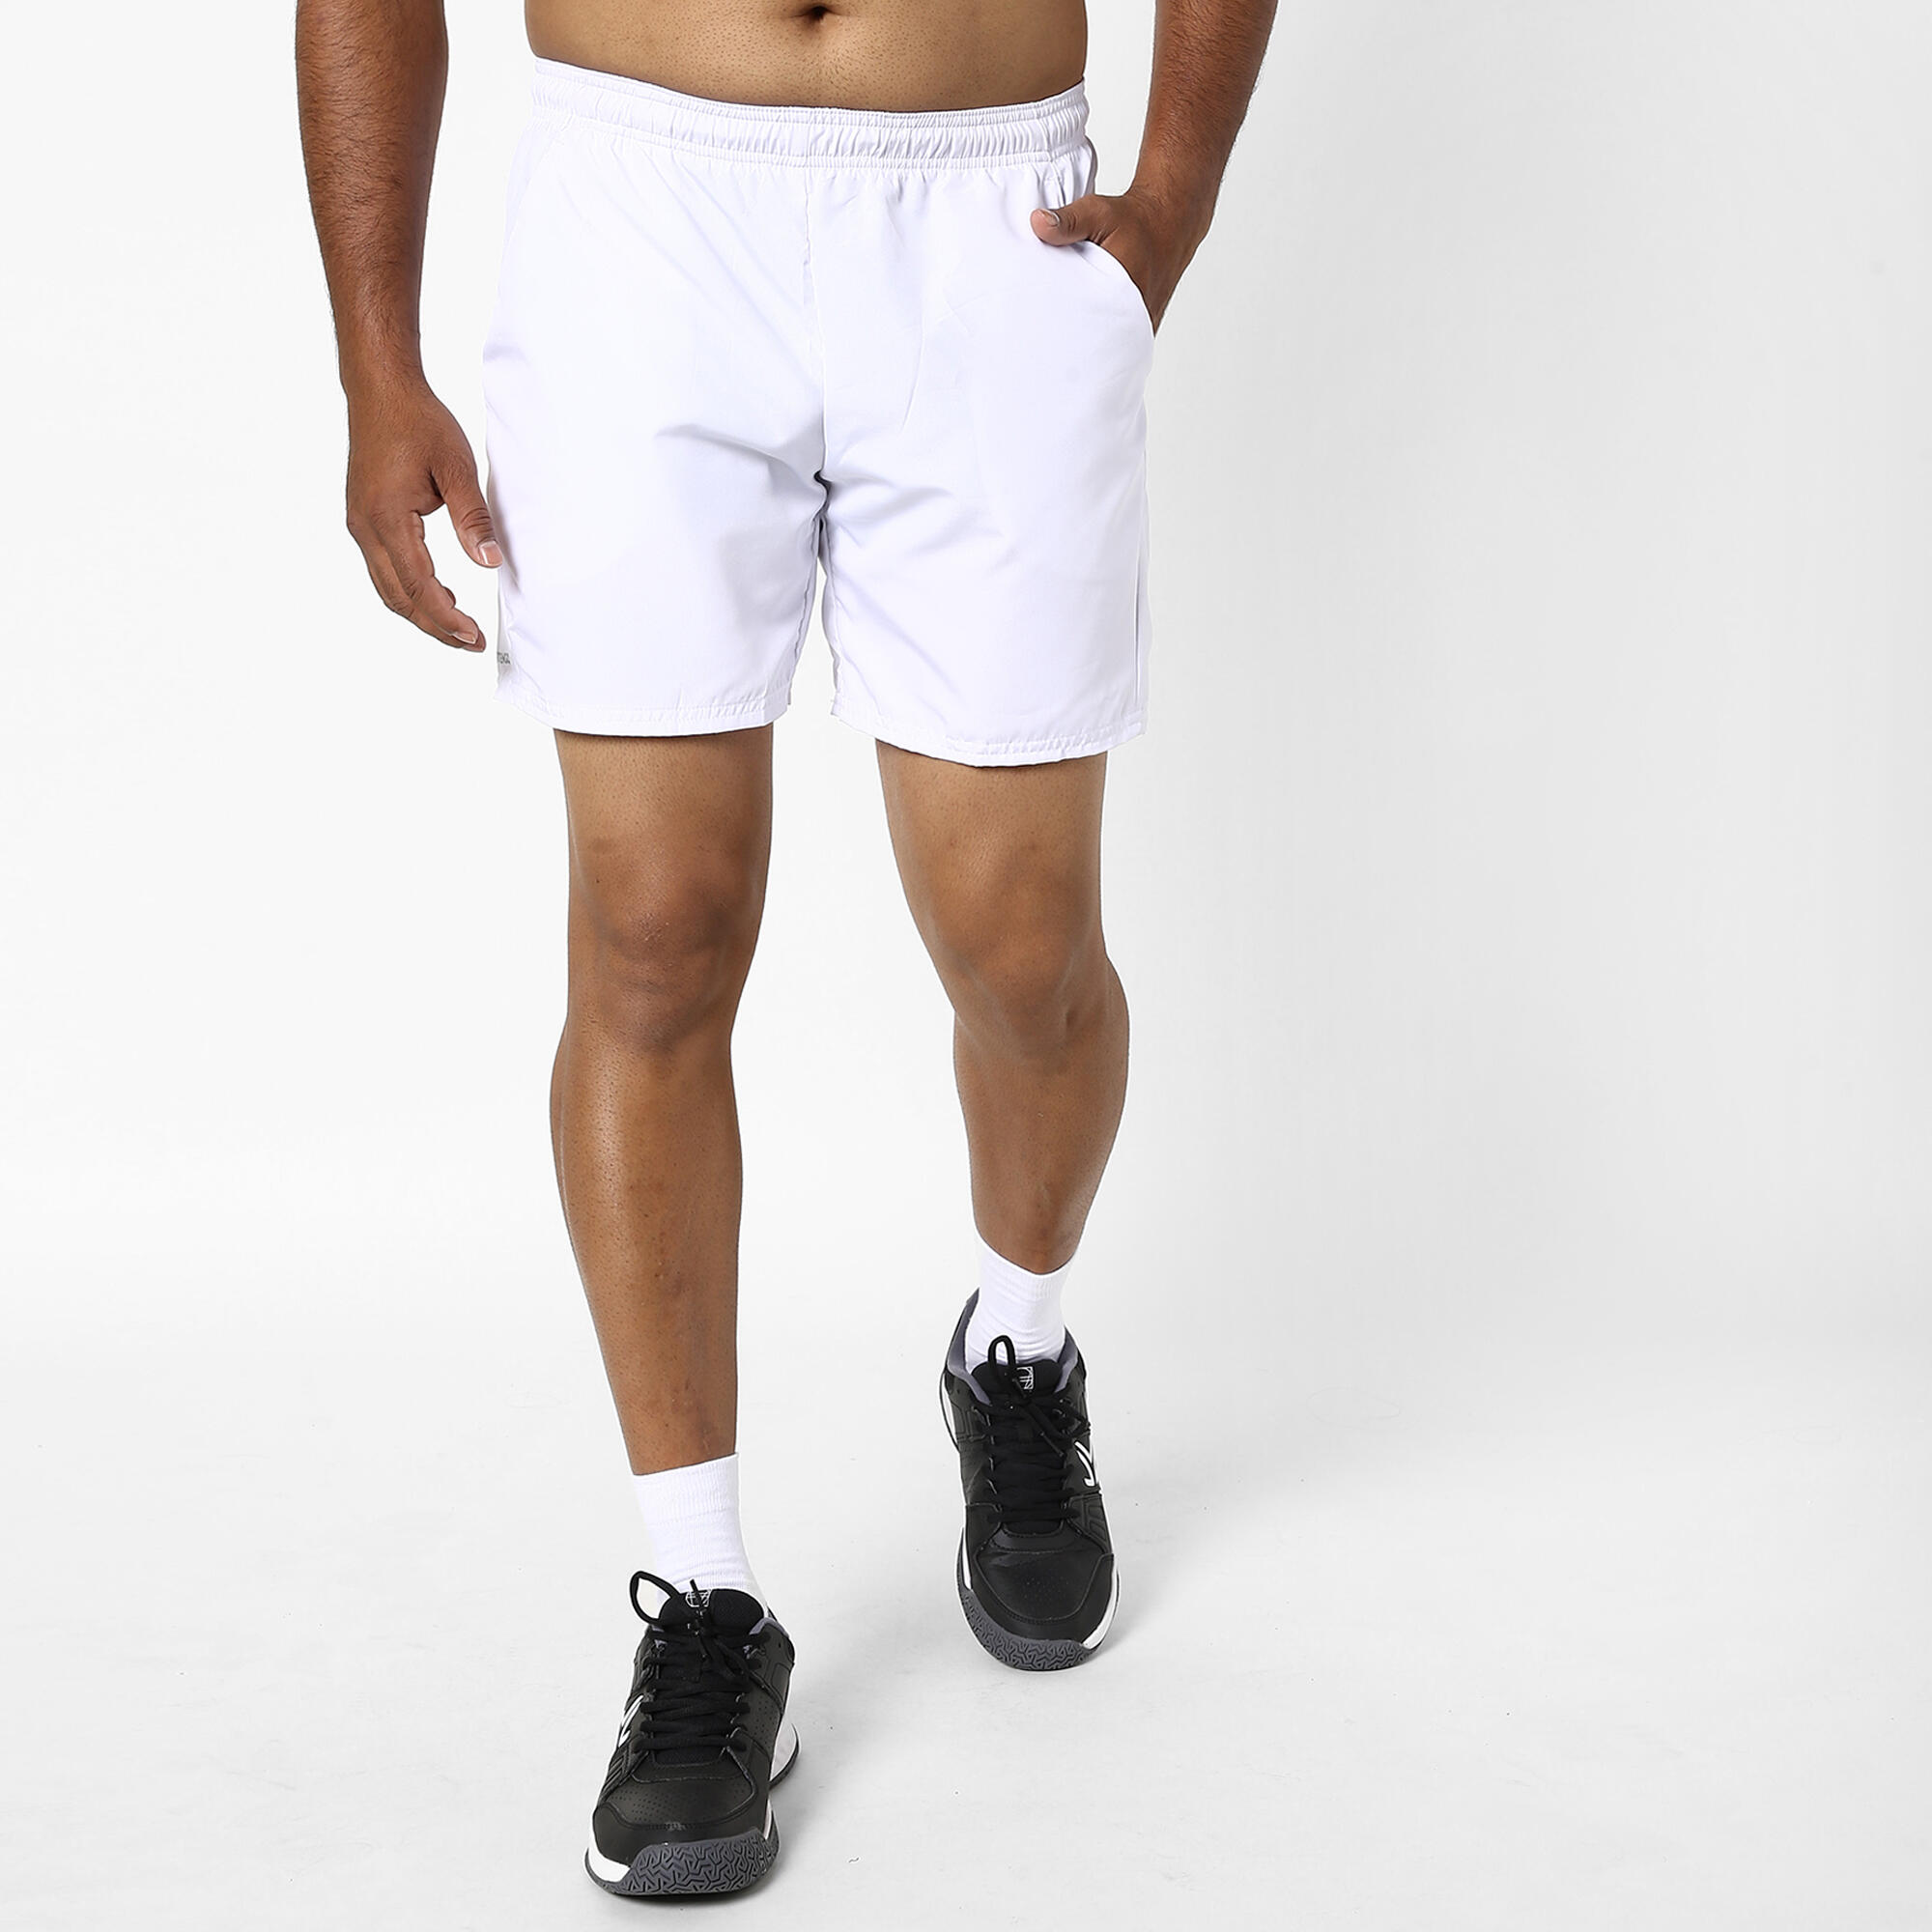 Pantalones cortos de deporte Traveler DSquared² de Algodón de color Negro para hombre Hombre Ropa de Pantalones cortos de Pantalones cortos informales 